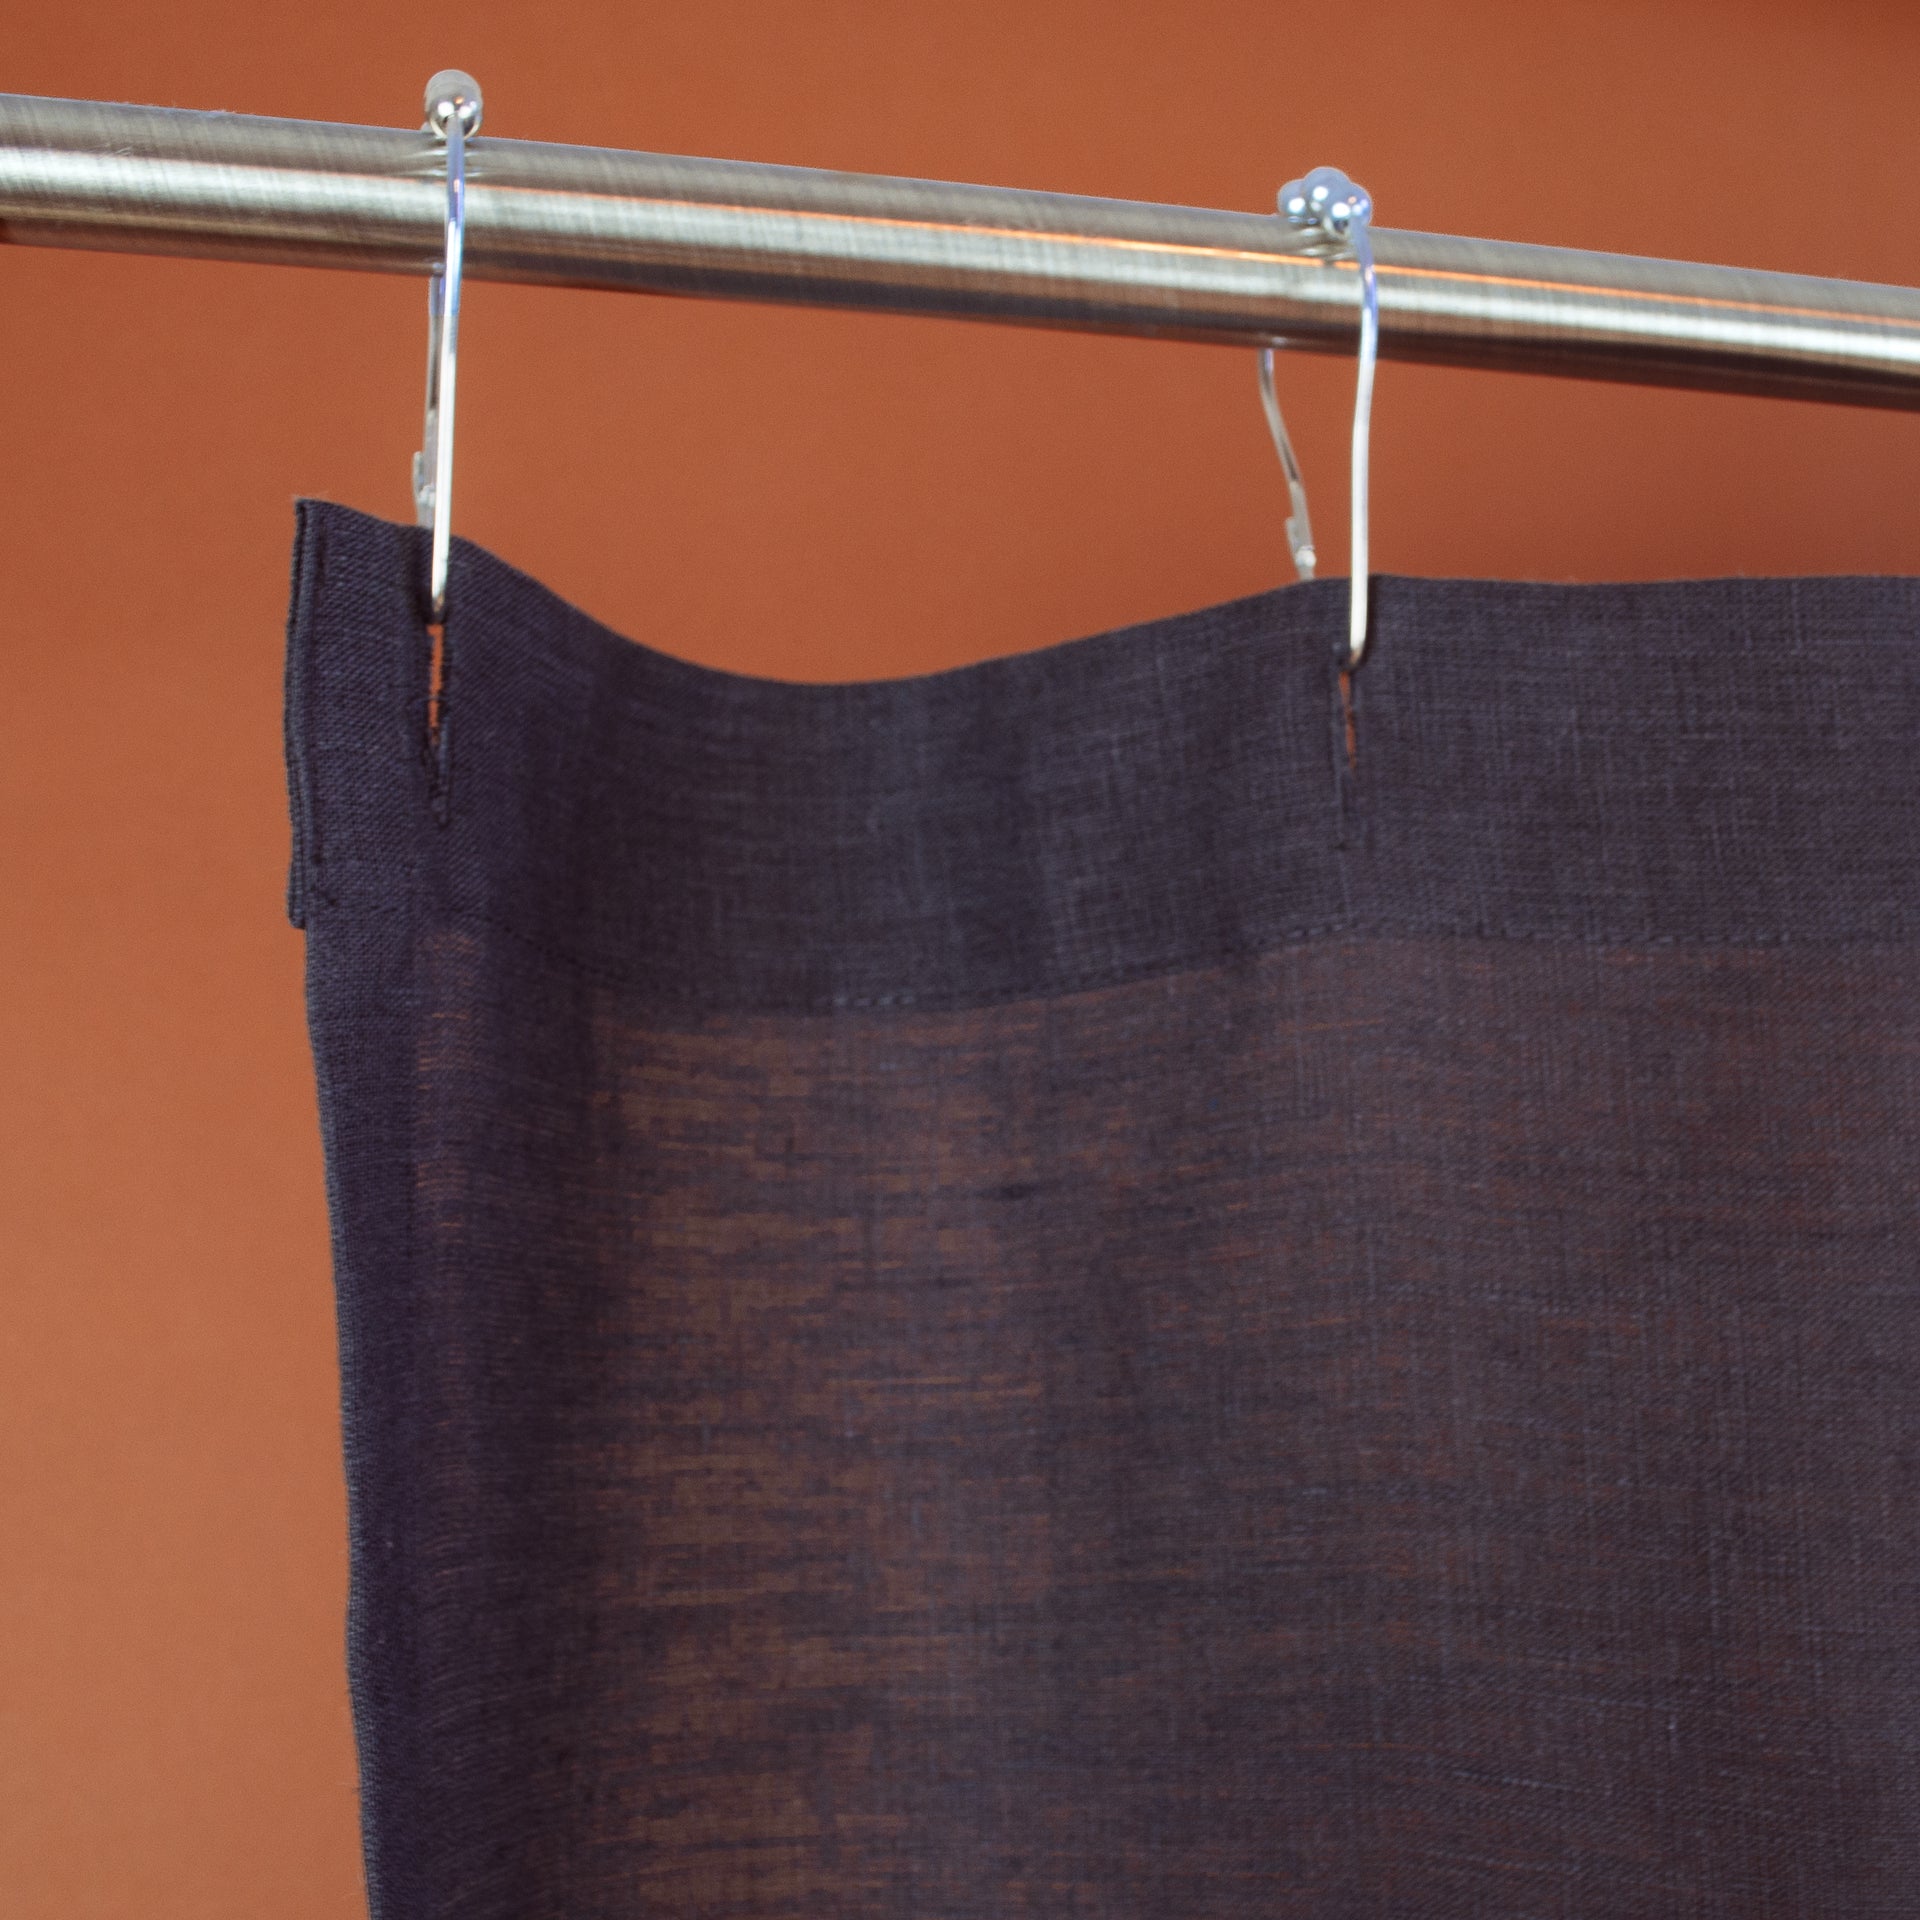 Linen Shower Curtains, Color: Charcoal